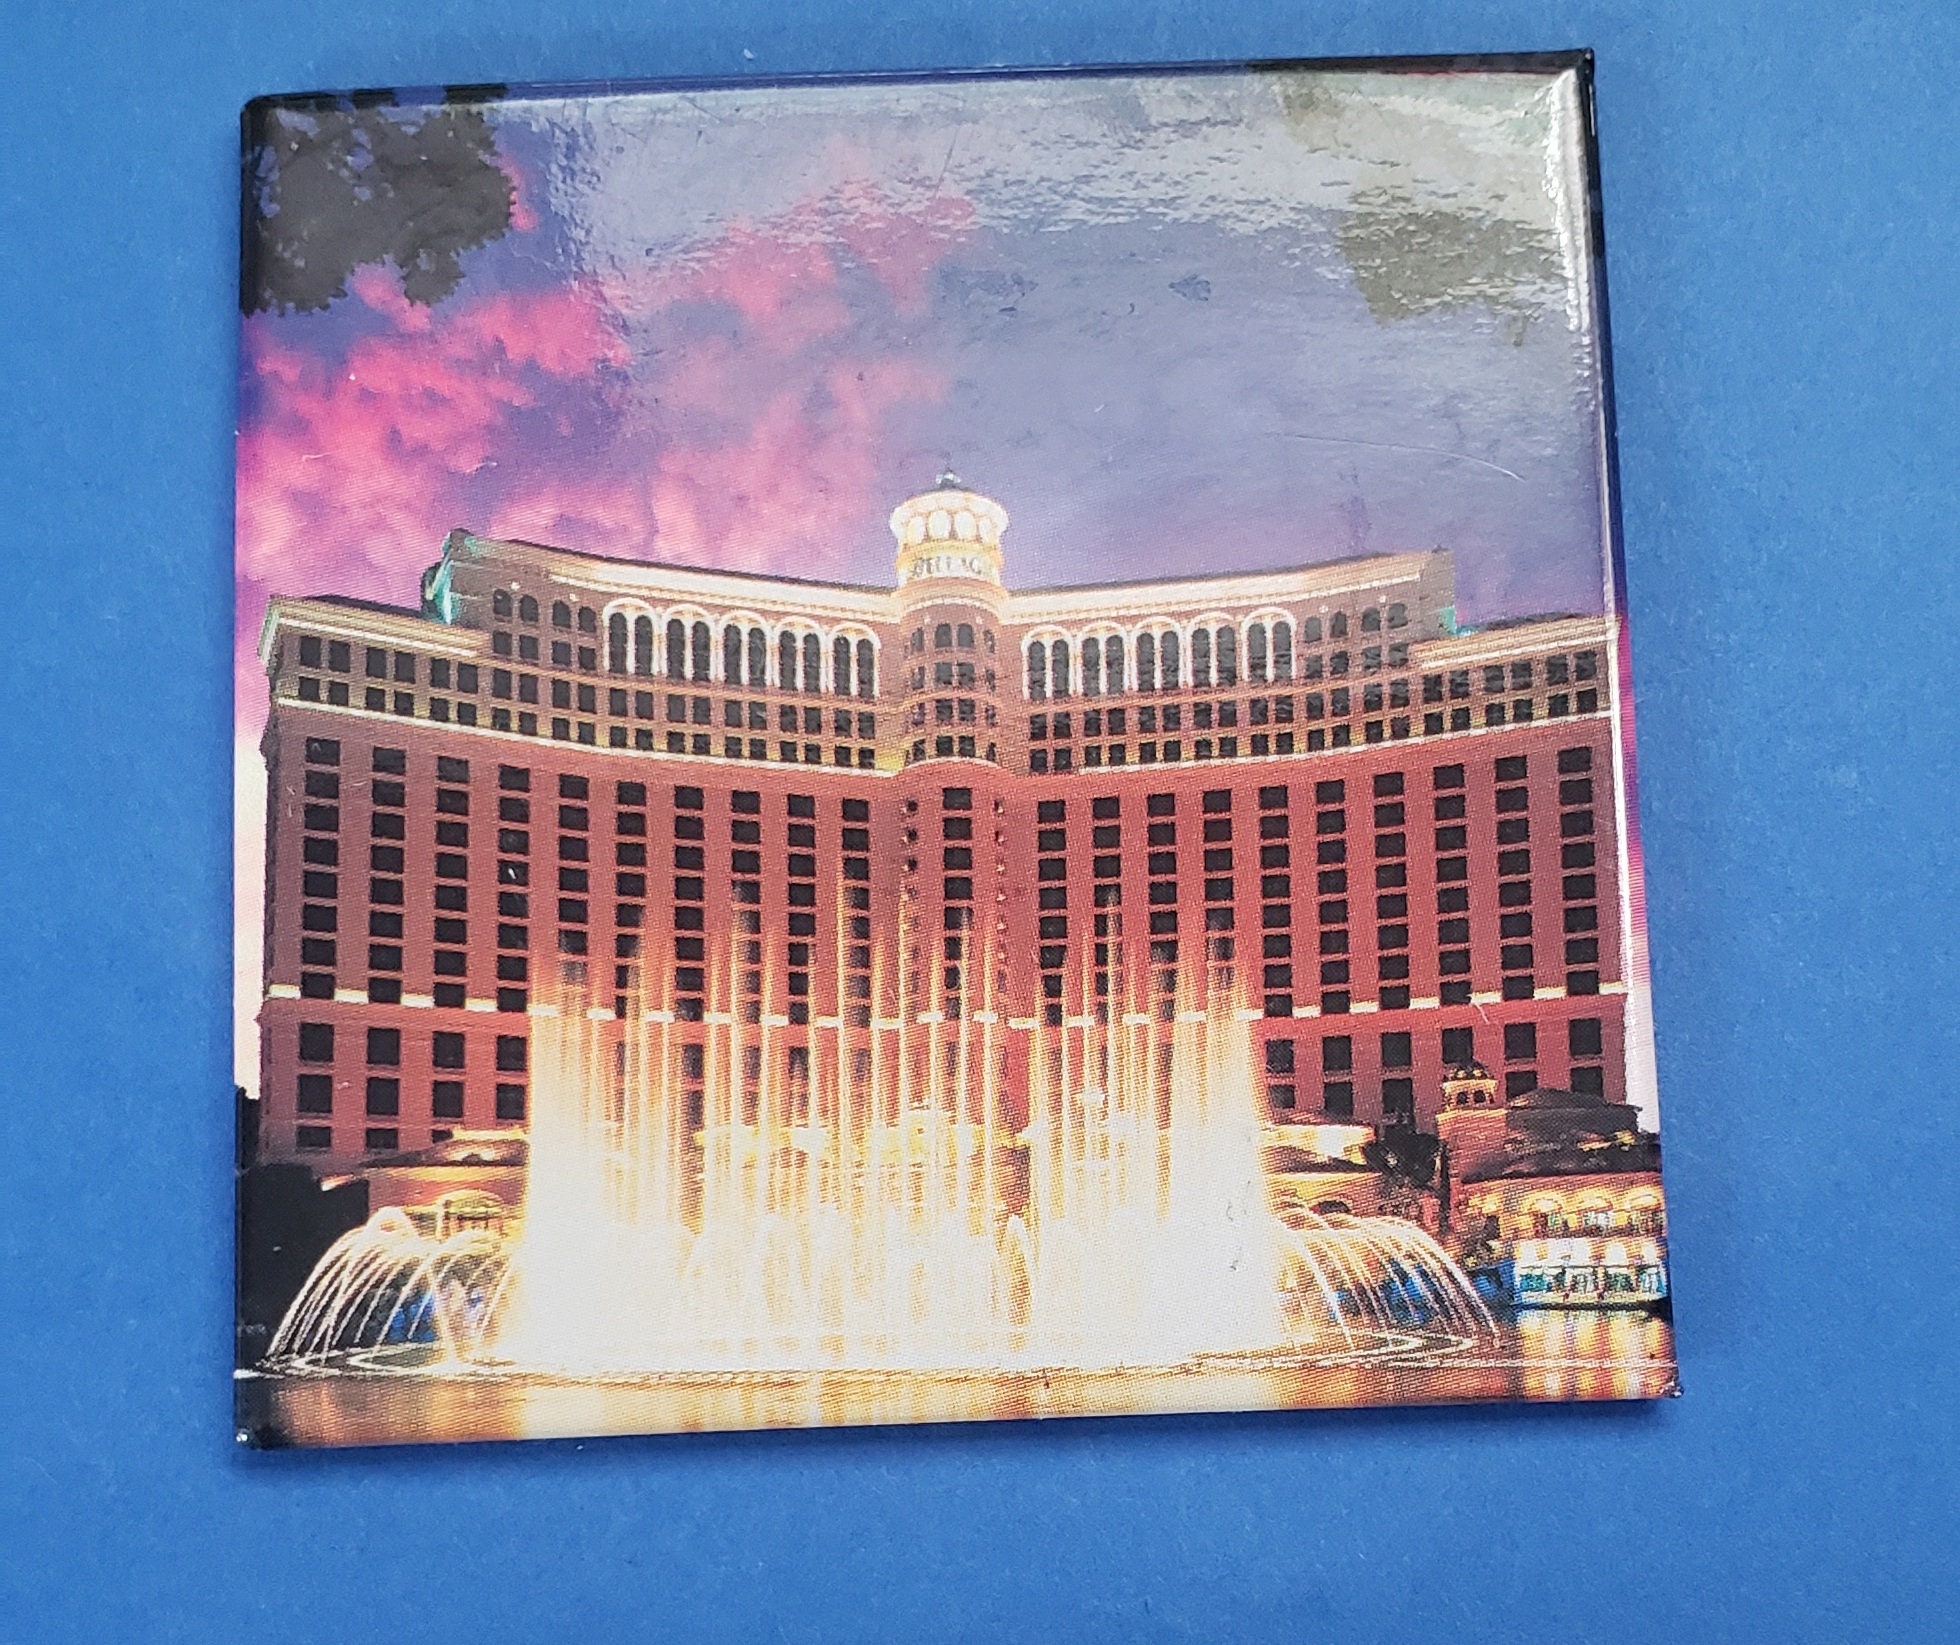 Fountains of Bellagio - Paris - Las Vegas - American Coatings Association